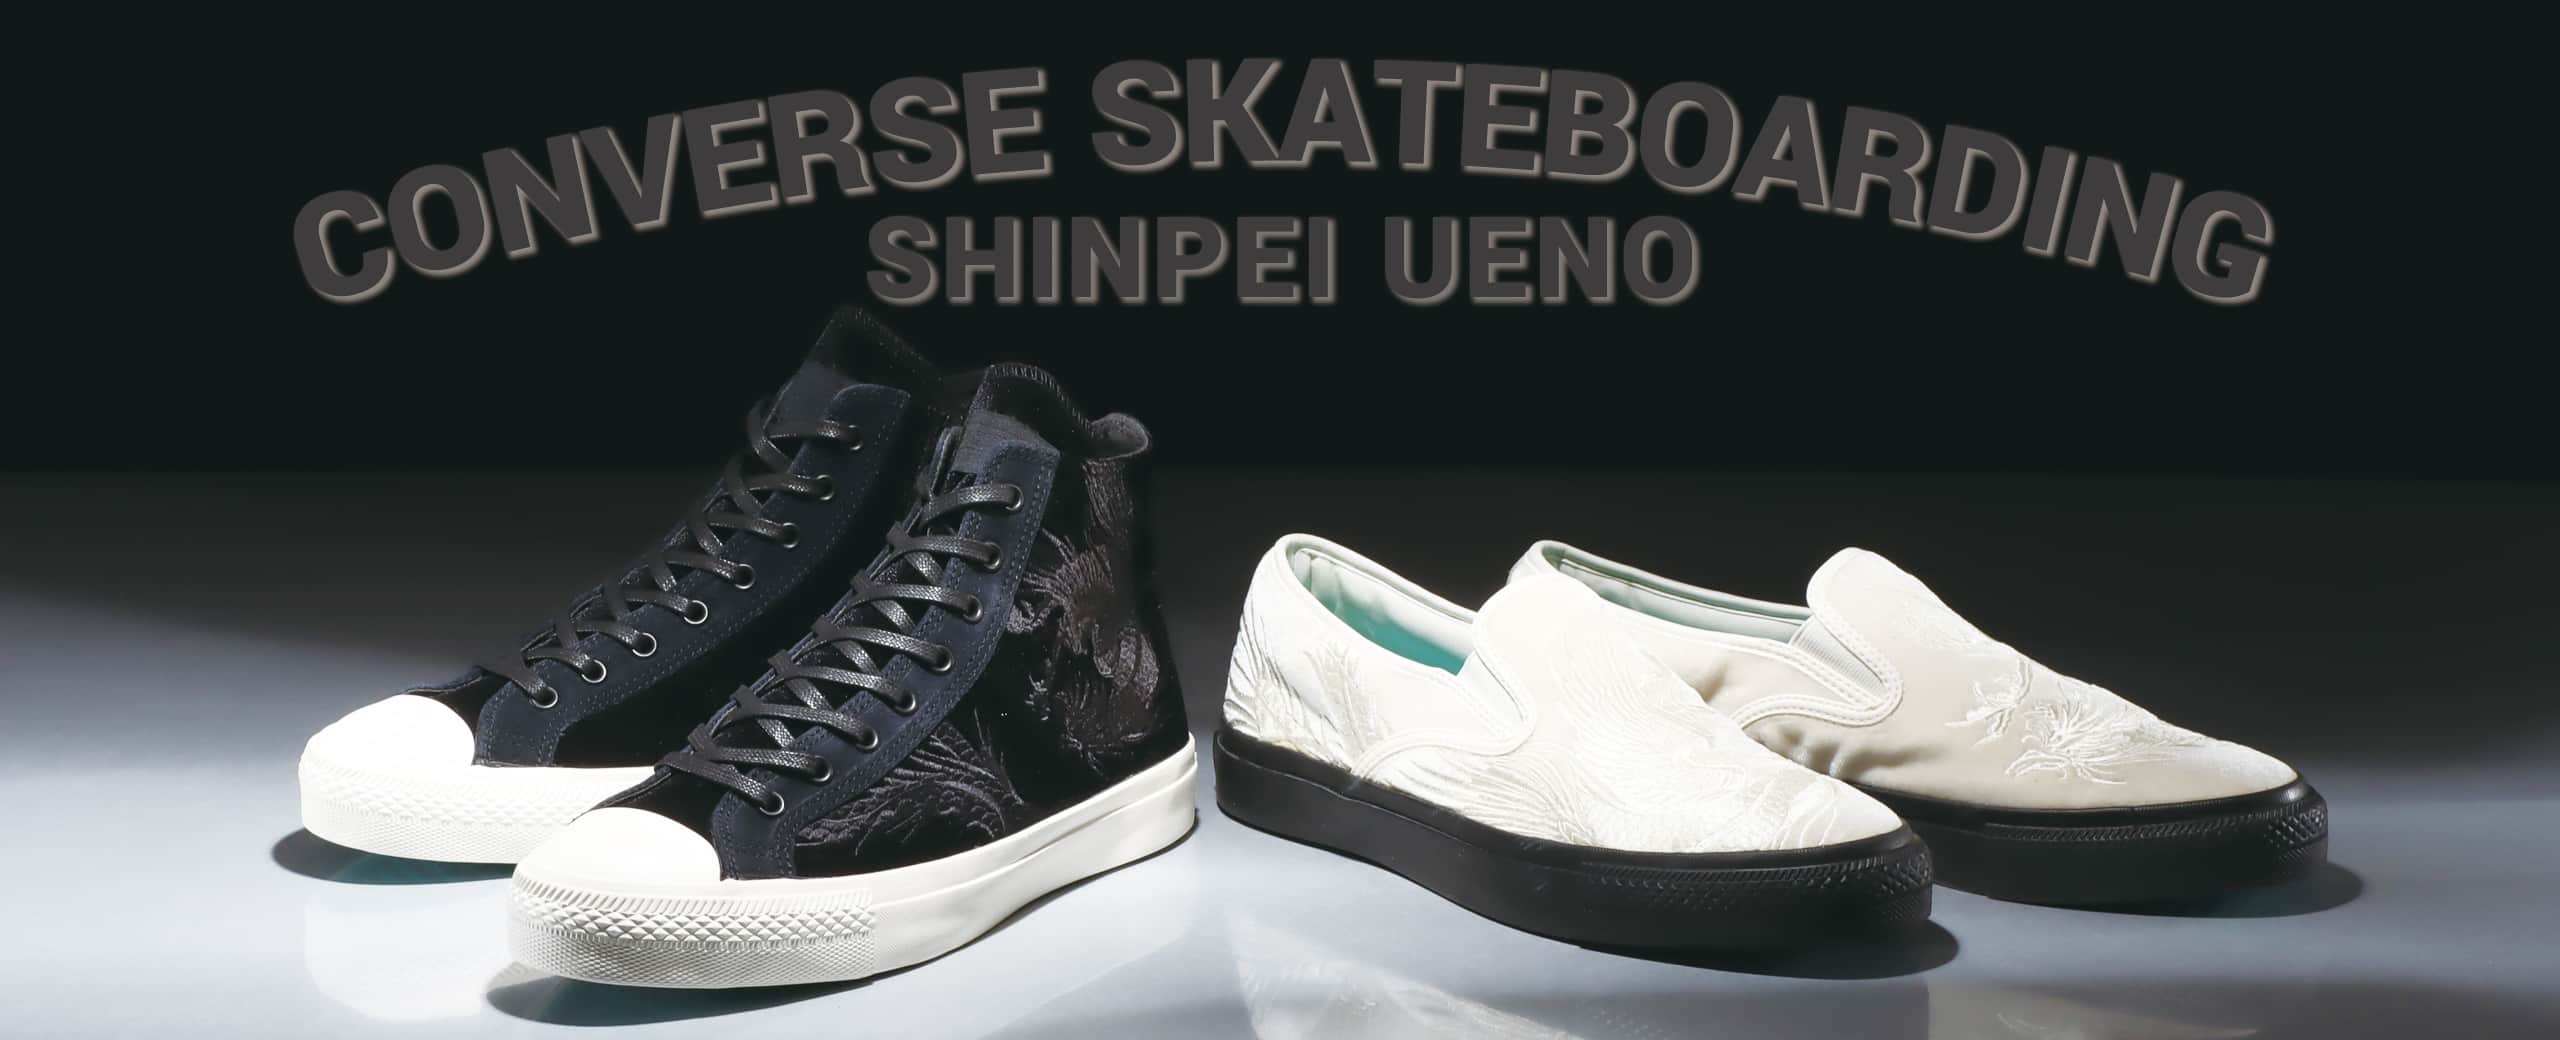 "CONVERSE SKATEBORDING SHINPEI UENO"